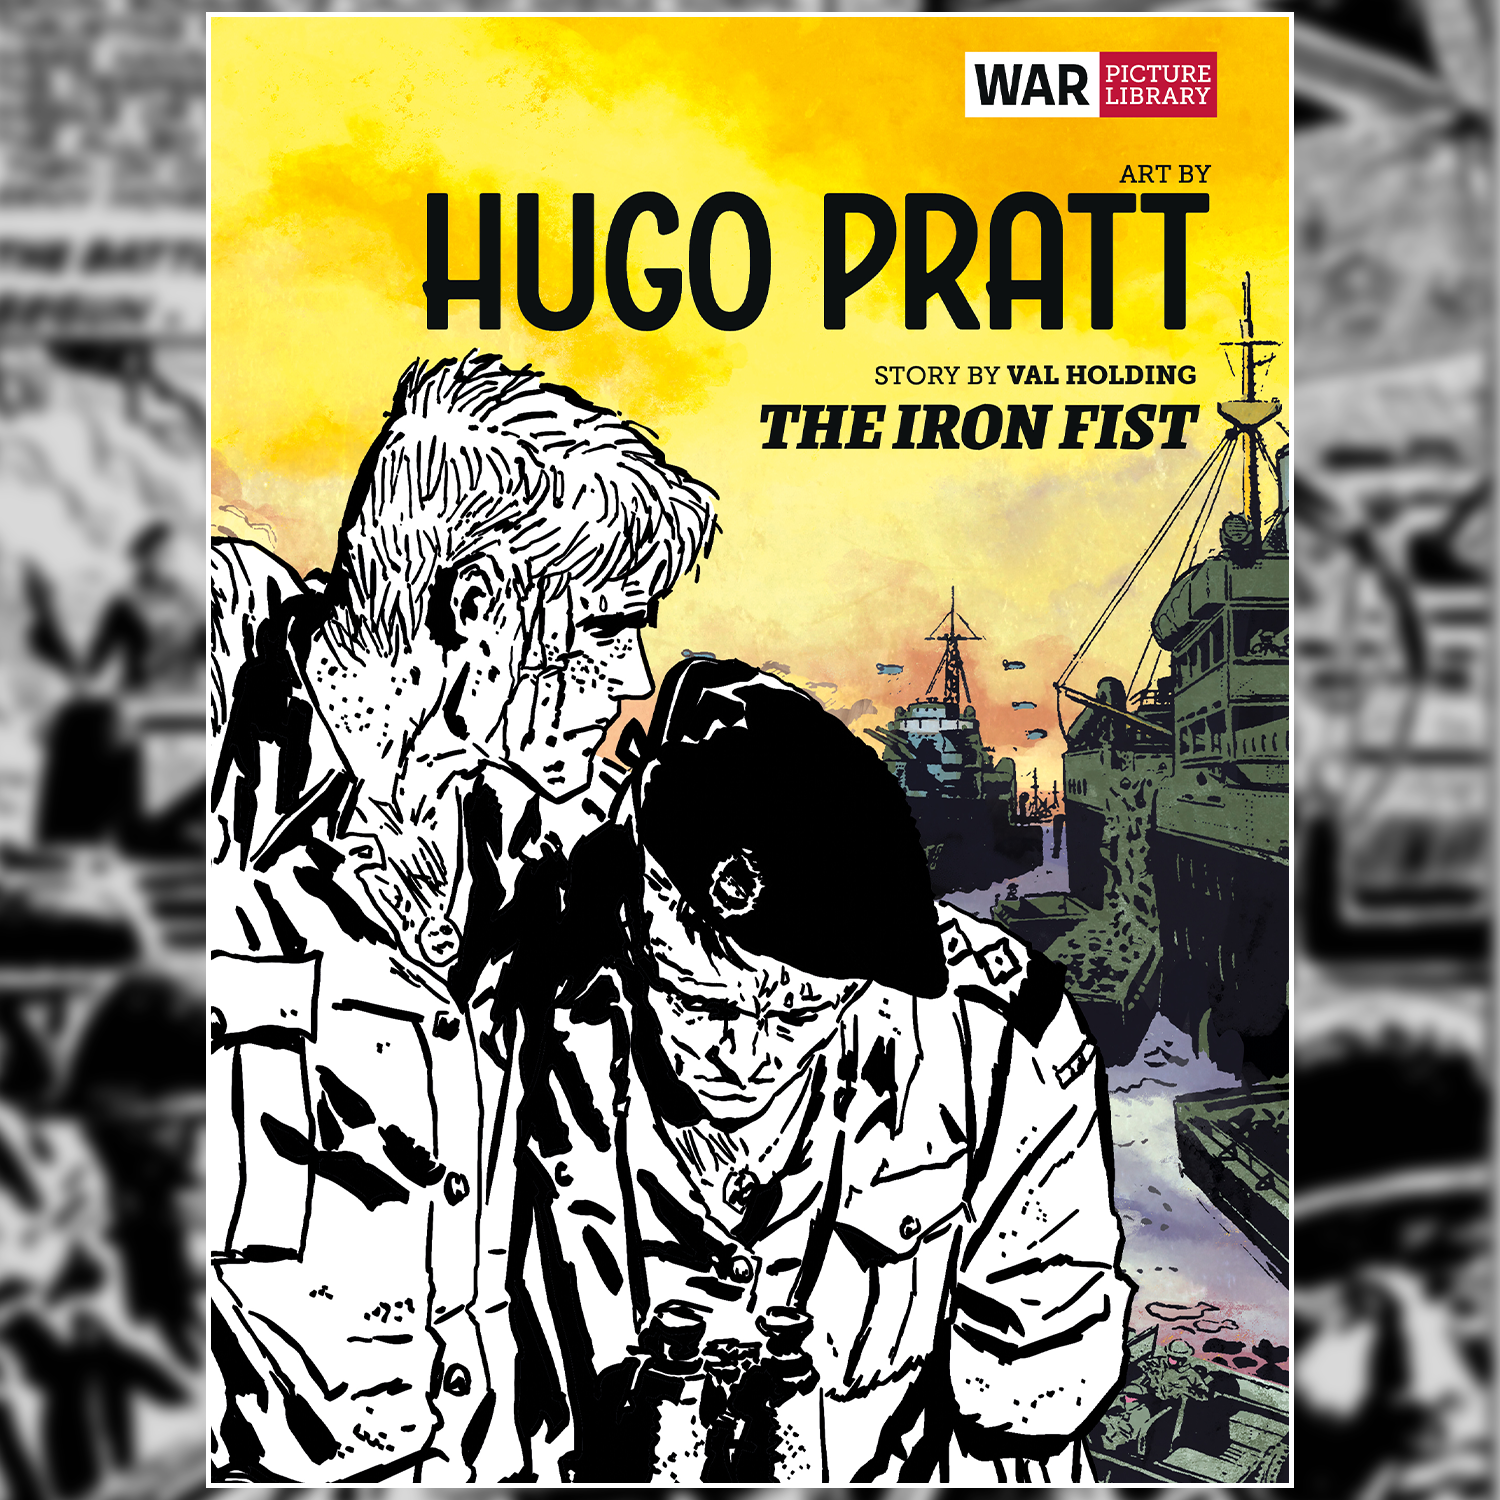 Pre-order now! The Iron Fist by Hugo Pratt